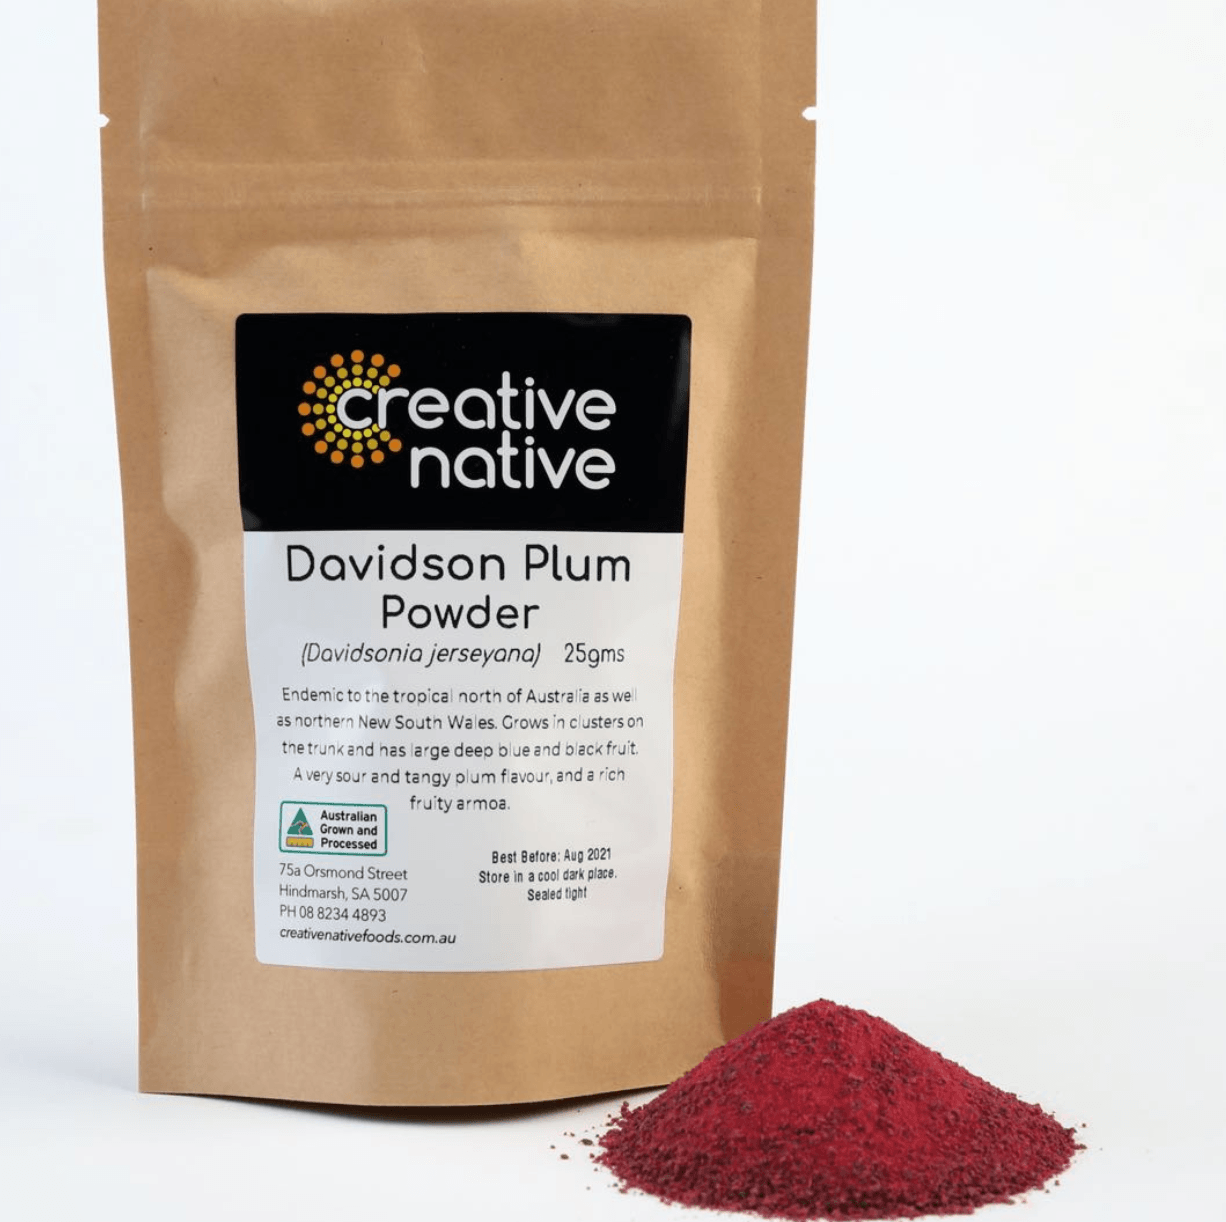 Creative Native - Davidson Plum Powder 25gm - Ensemble Studios